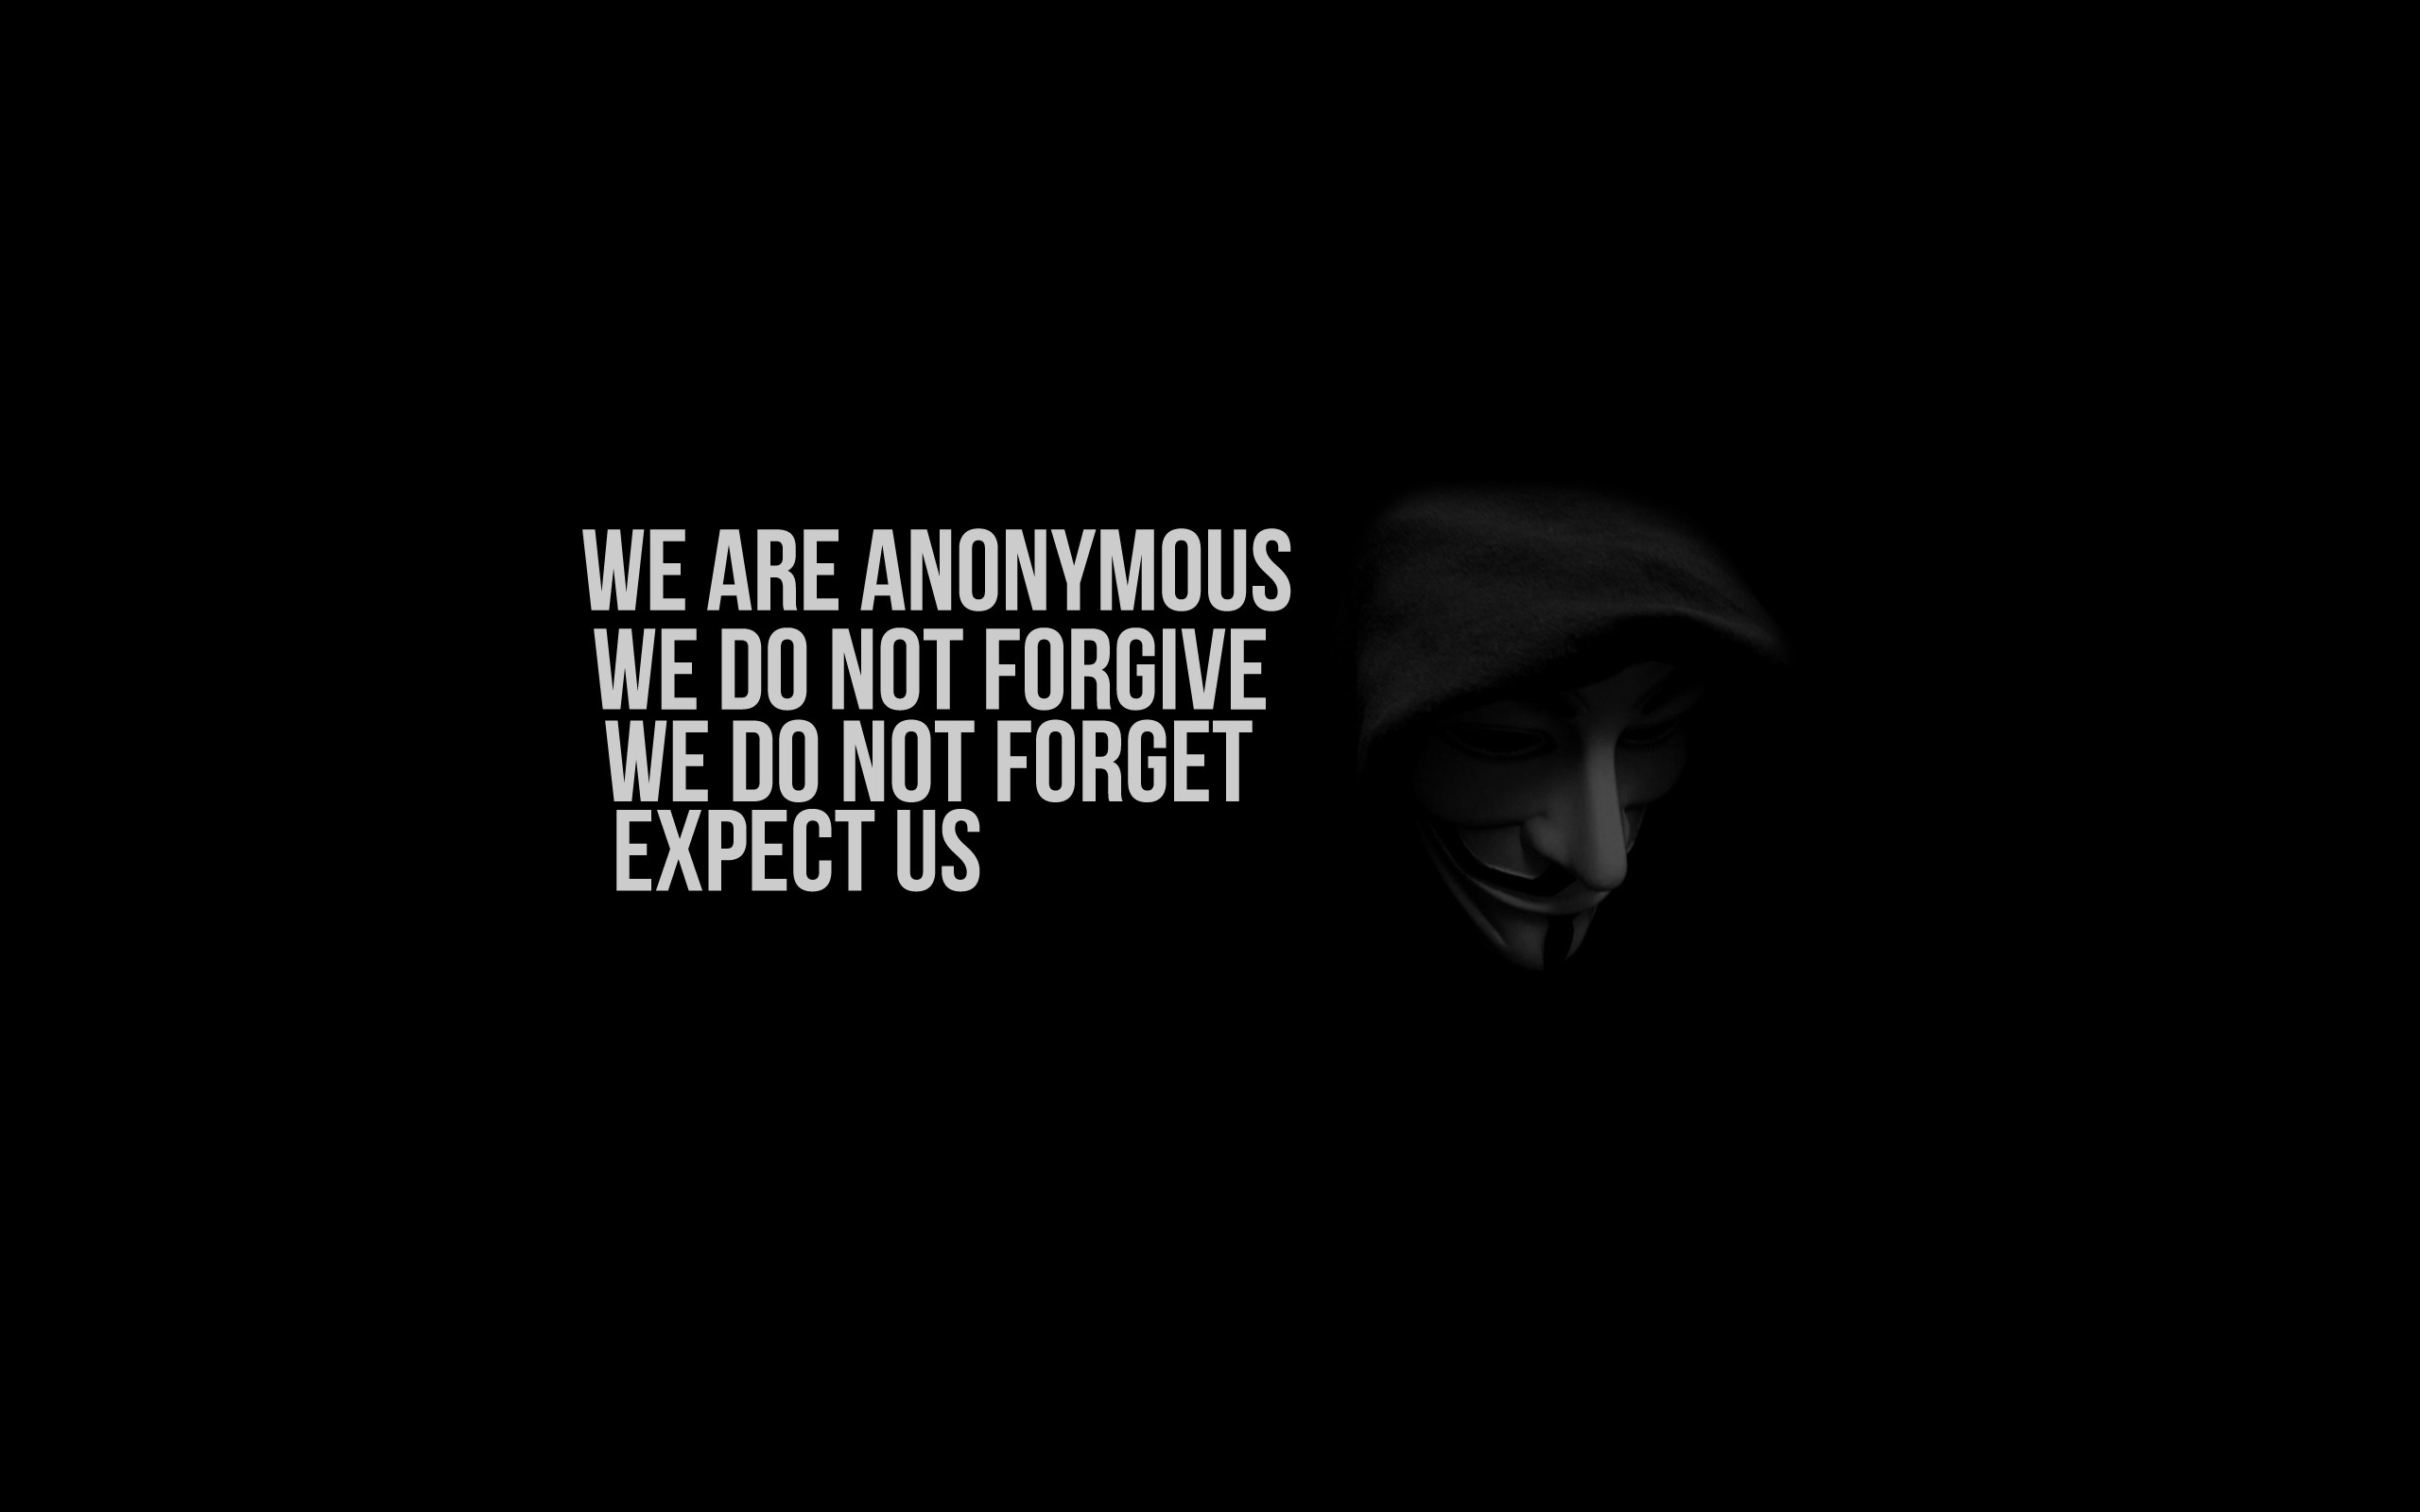 anonymous legion england renaissance masks guy fawkes v for vendetta